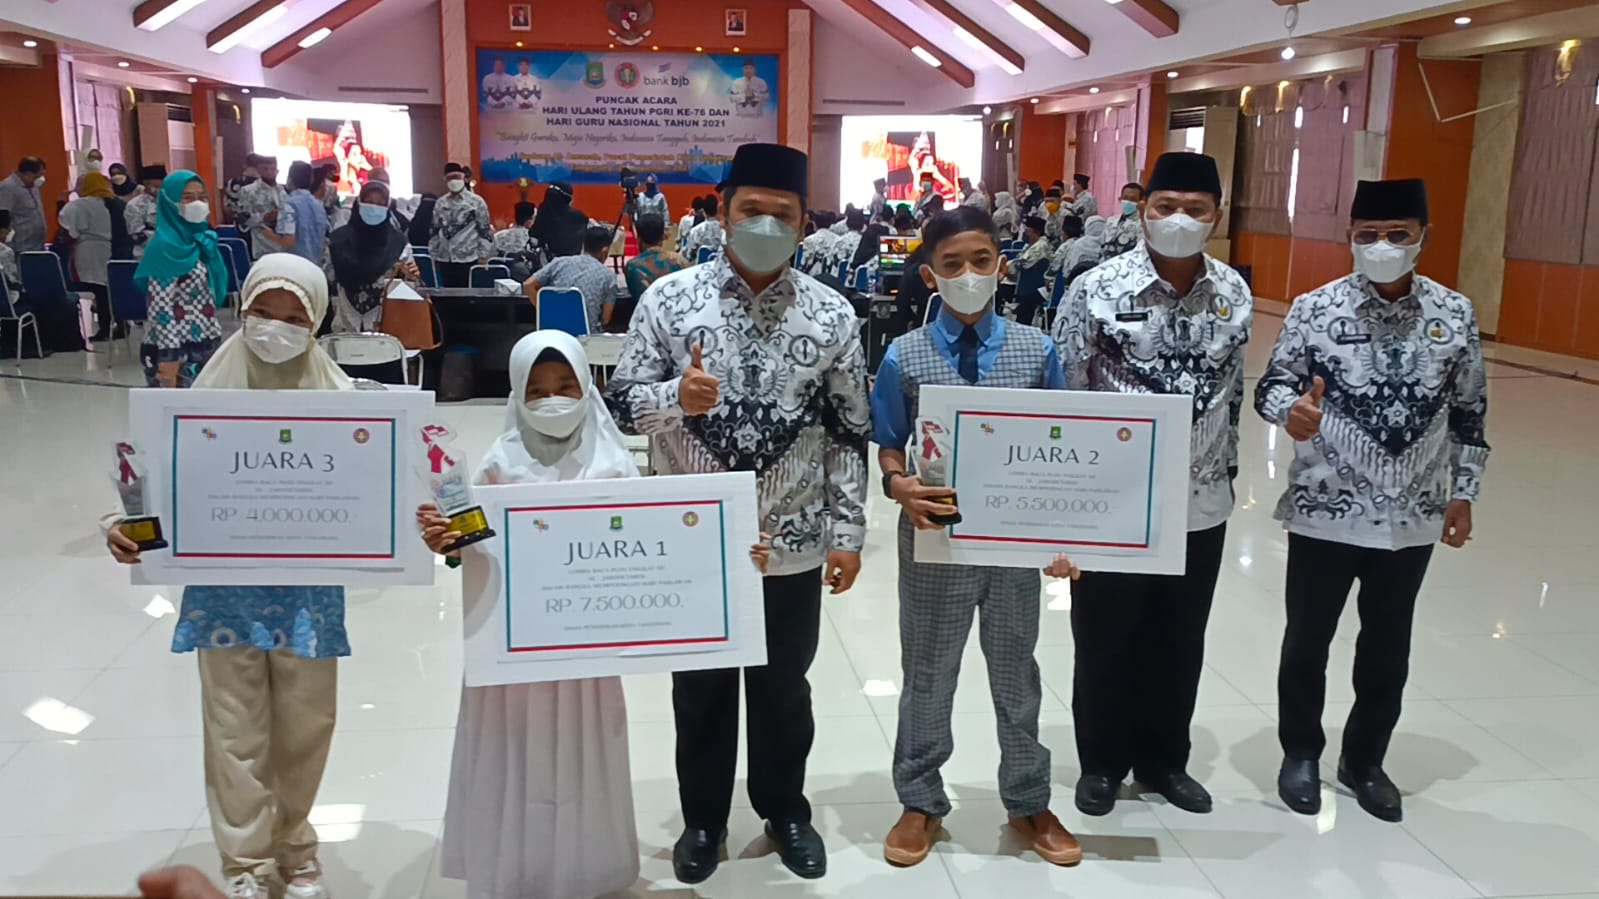 Pemerintah Kota Tangerang melalui Dinas Pendidikan menggelar puncak acara dalam rangka peringatan Hari Guru Nasional dan HUT PGRI tahun 2021.